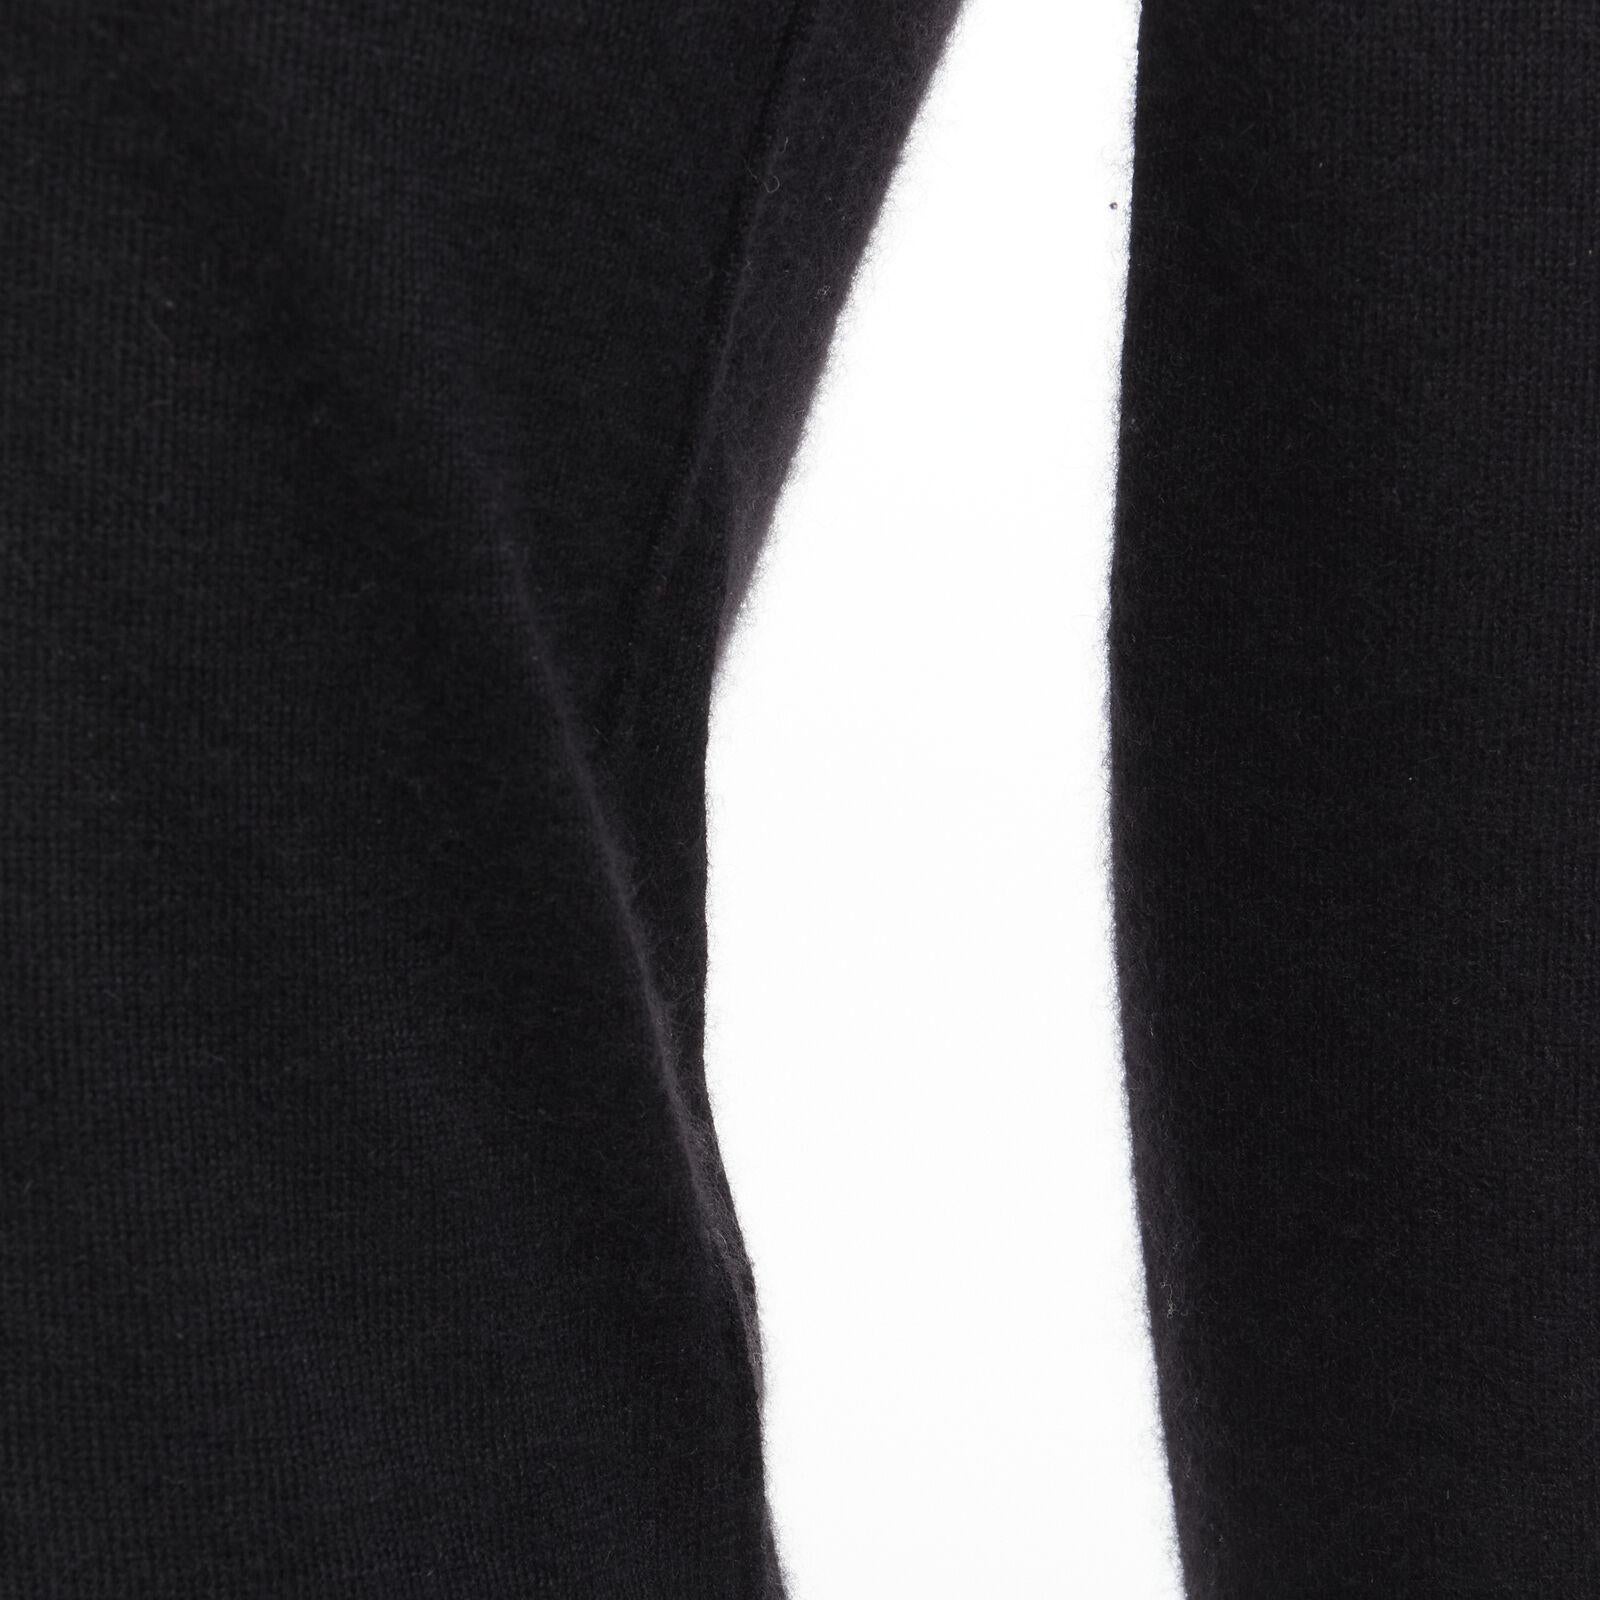 CLUB MONACO 100% Italian cashmere black turtleneck long sleeves sweater S For Sale 3